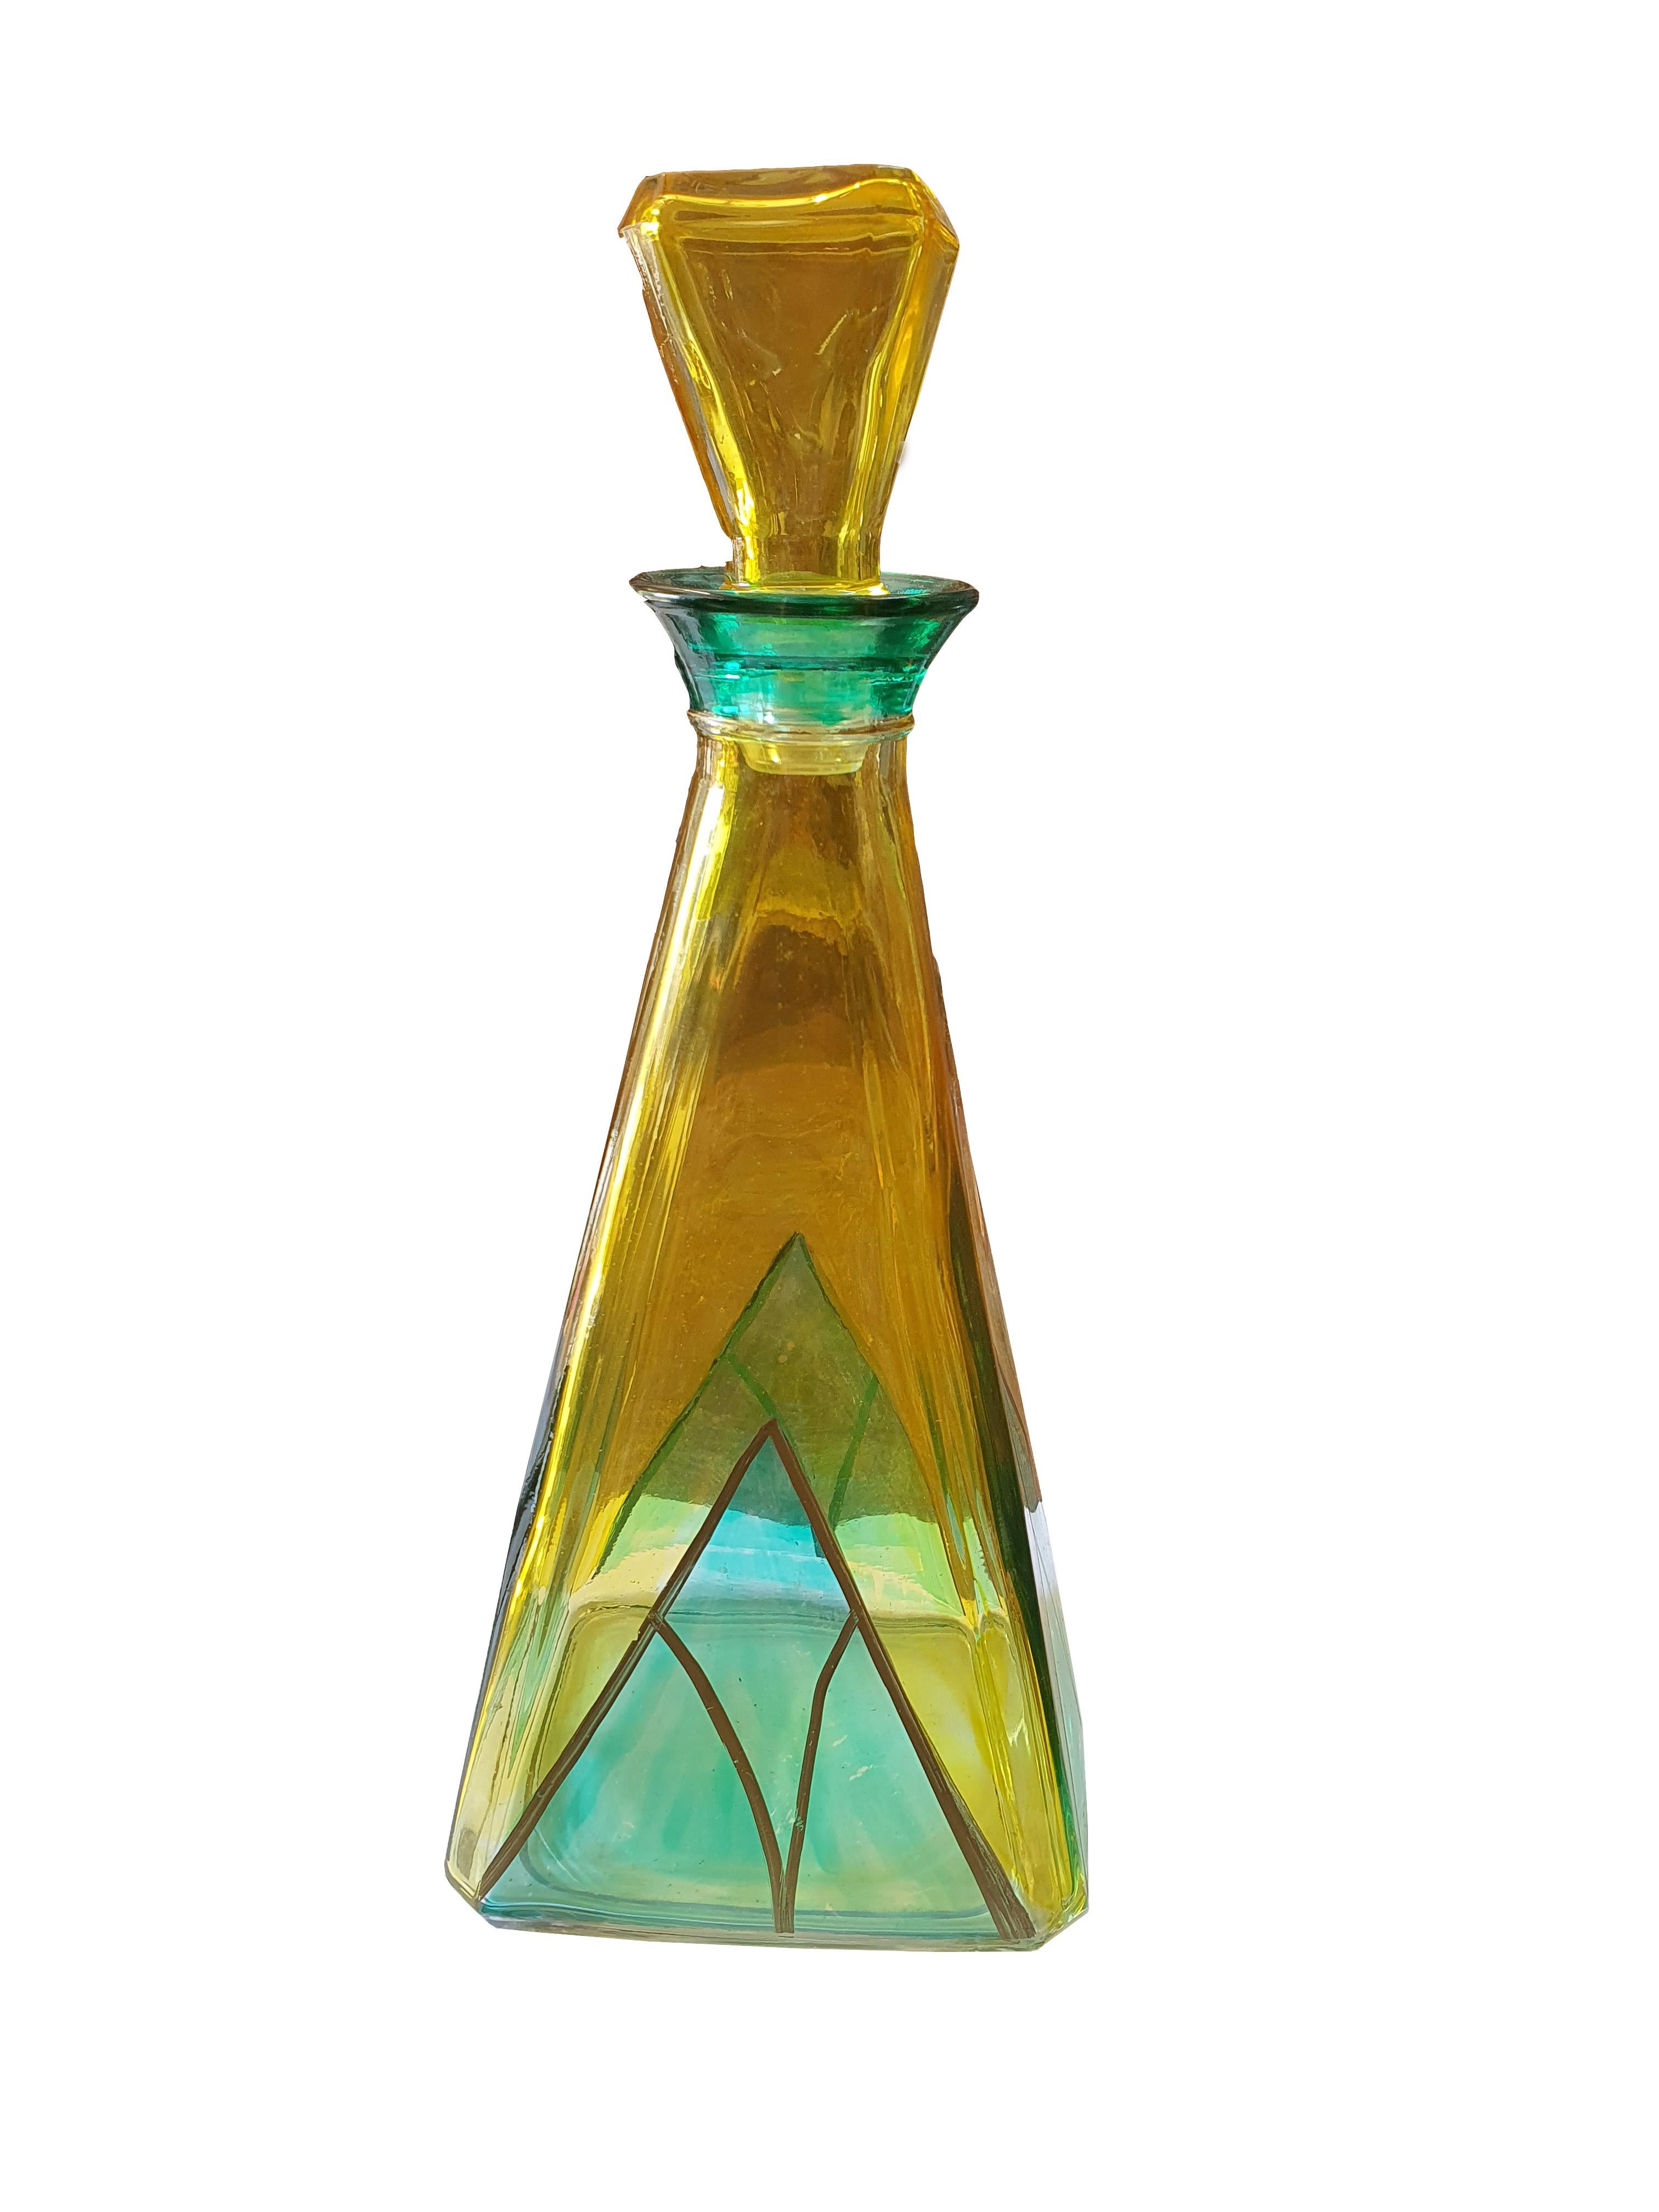 Murano glass bottle, made in Italy. 70's design.